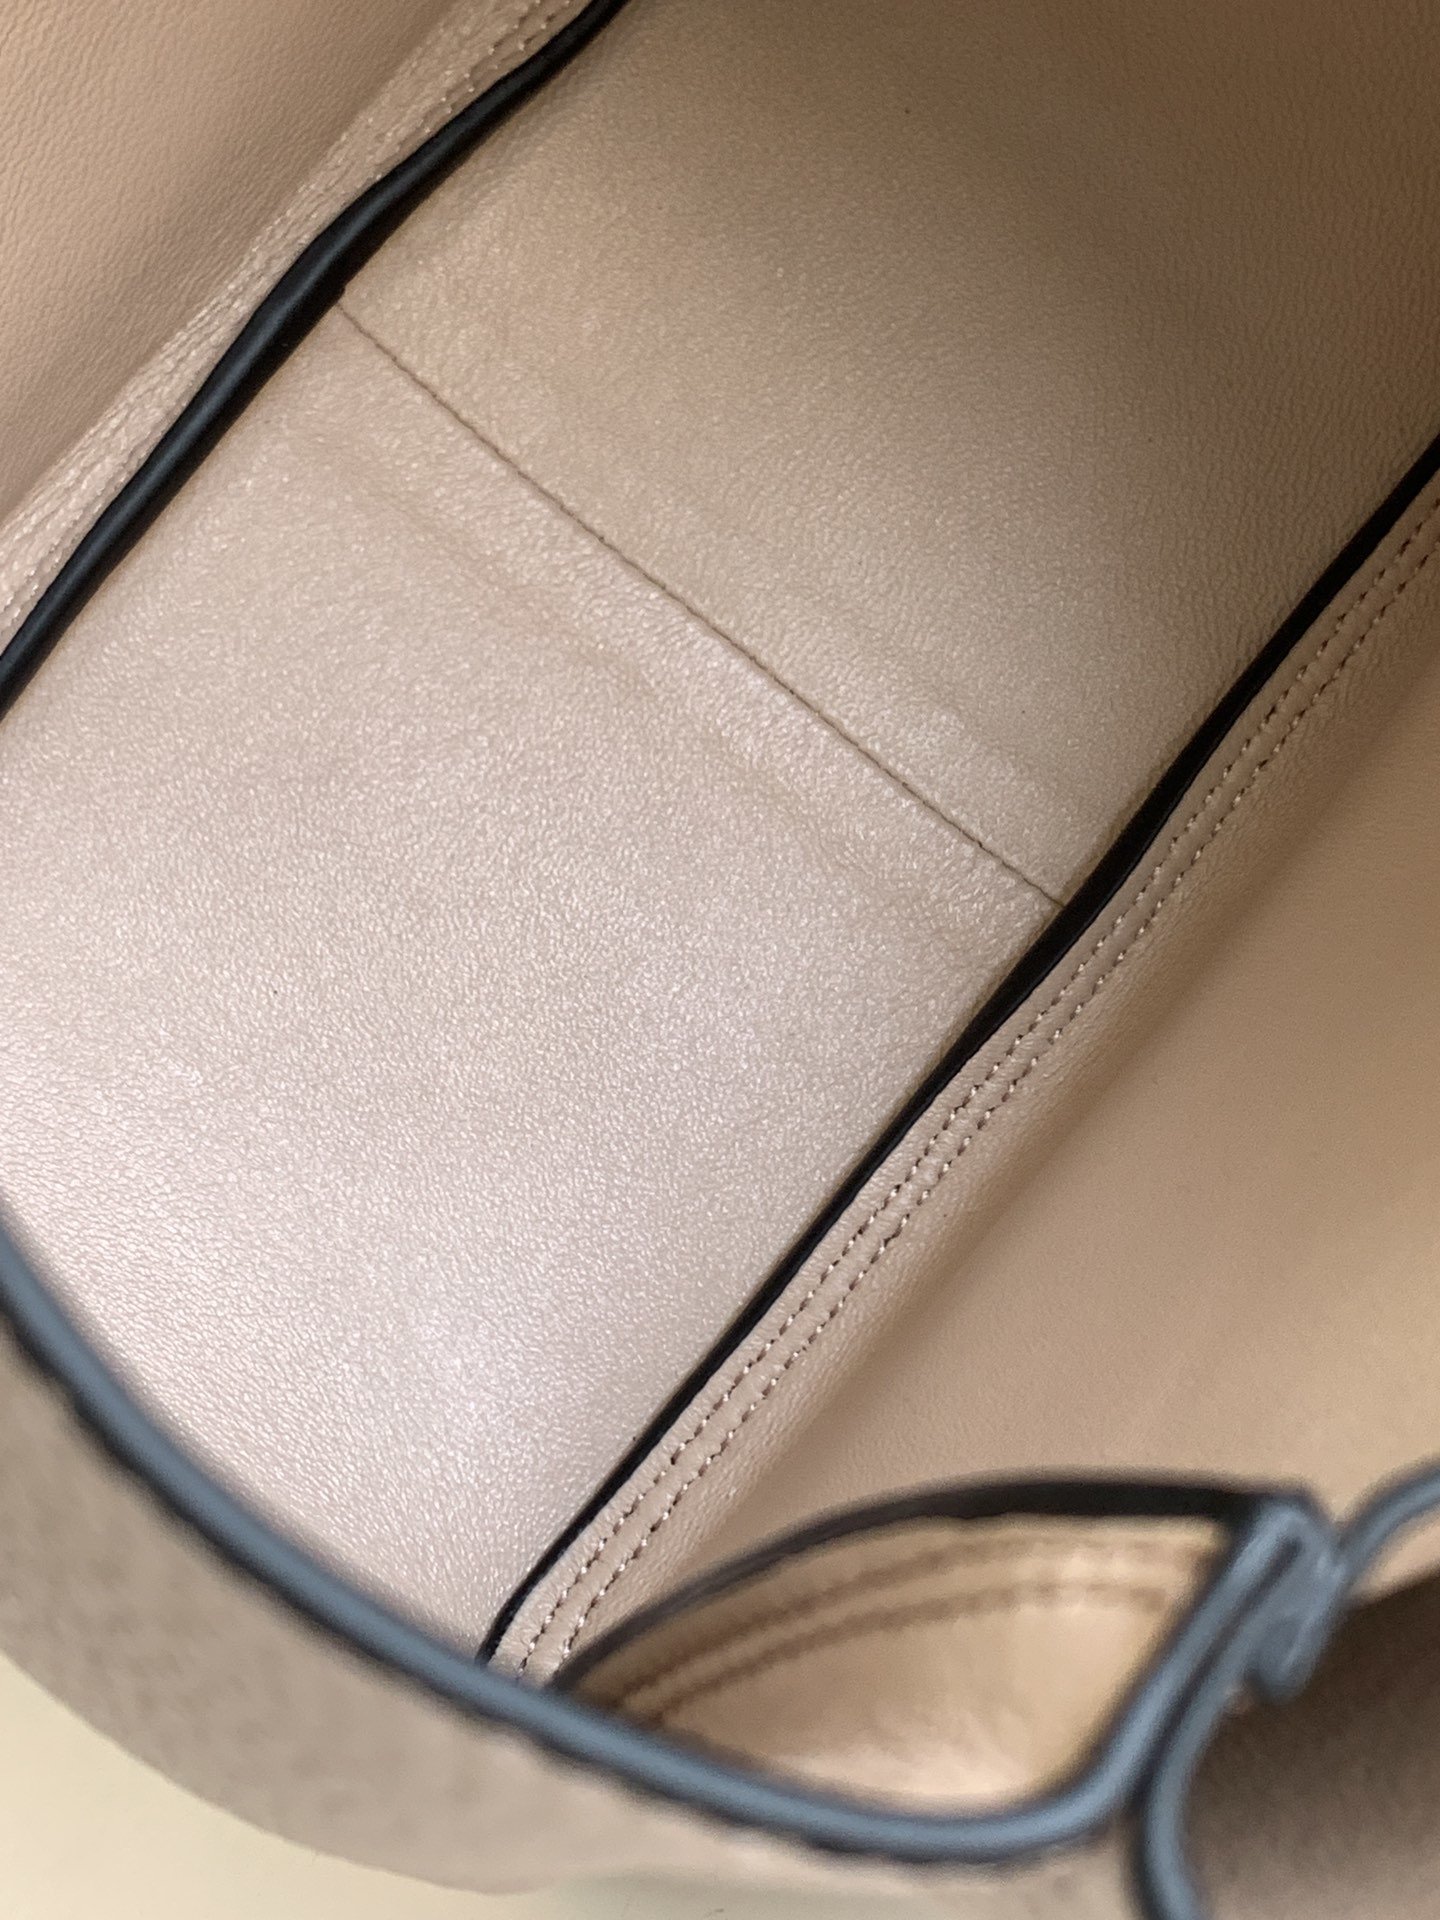 Сумка Leather handbag Reverse stitching 1BA349 18 см фото 7